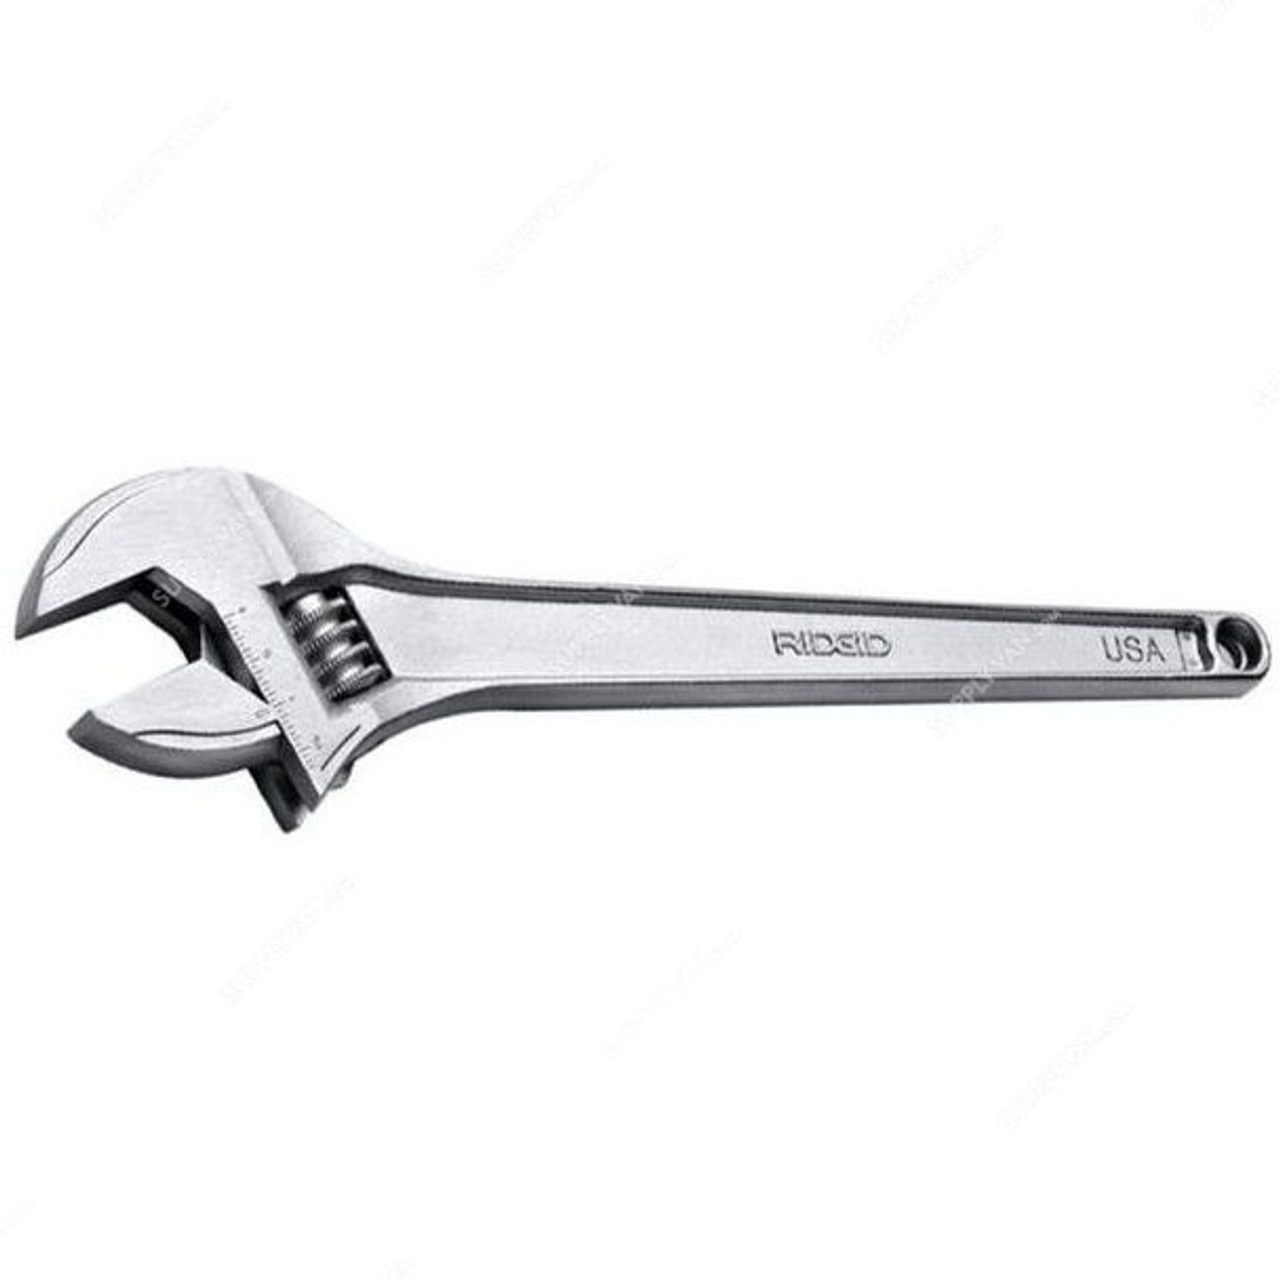 Ridgid Adjustable Wrench 86922 15 Inch Adjustable